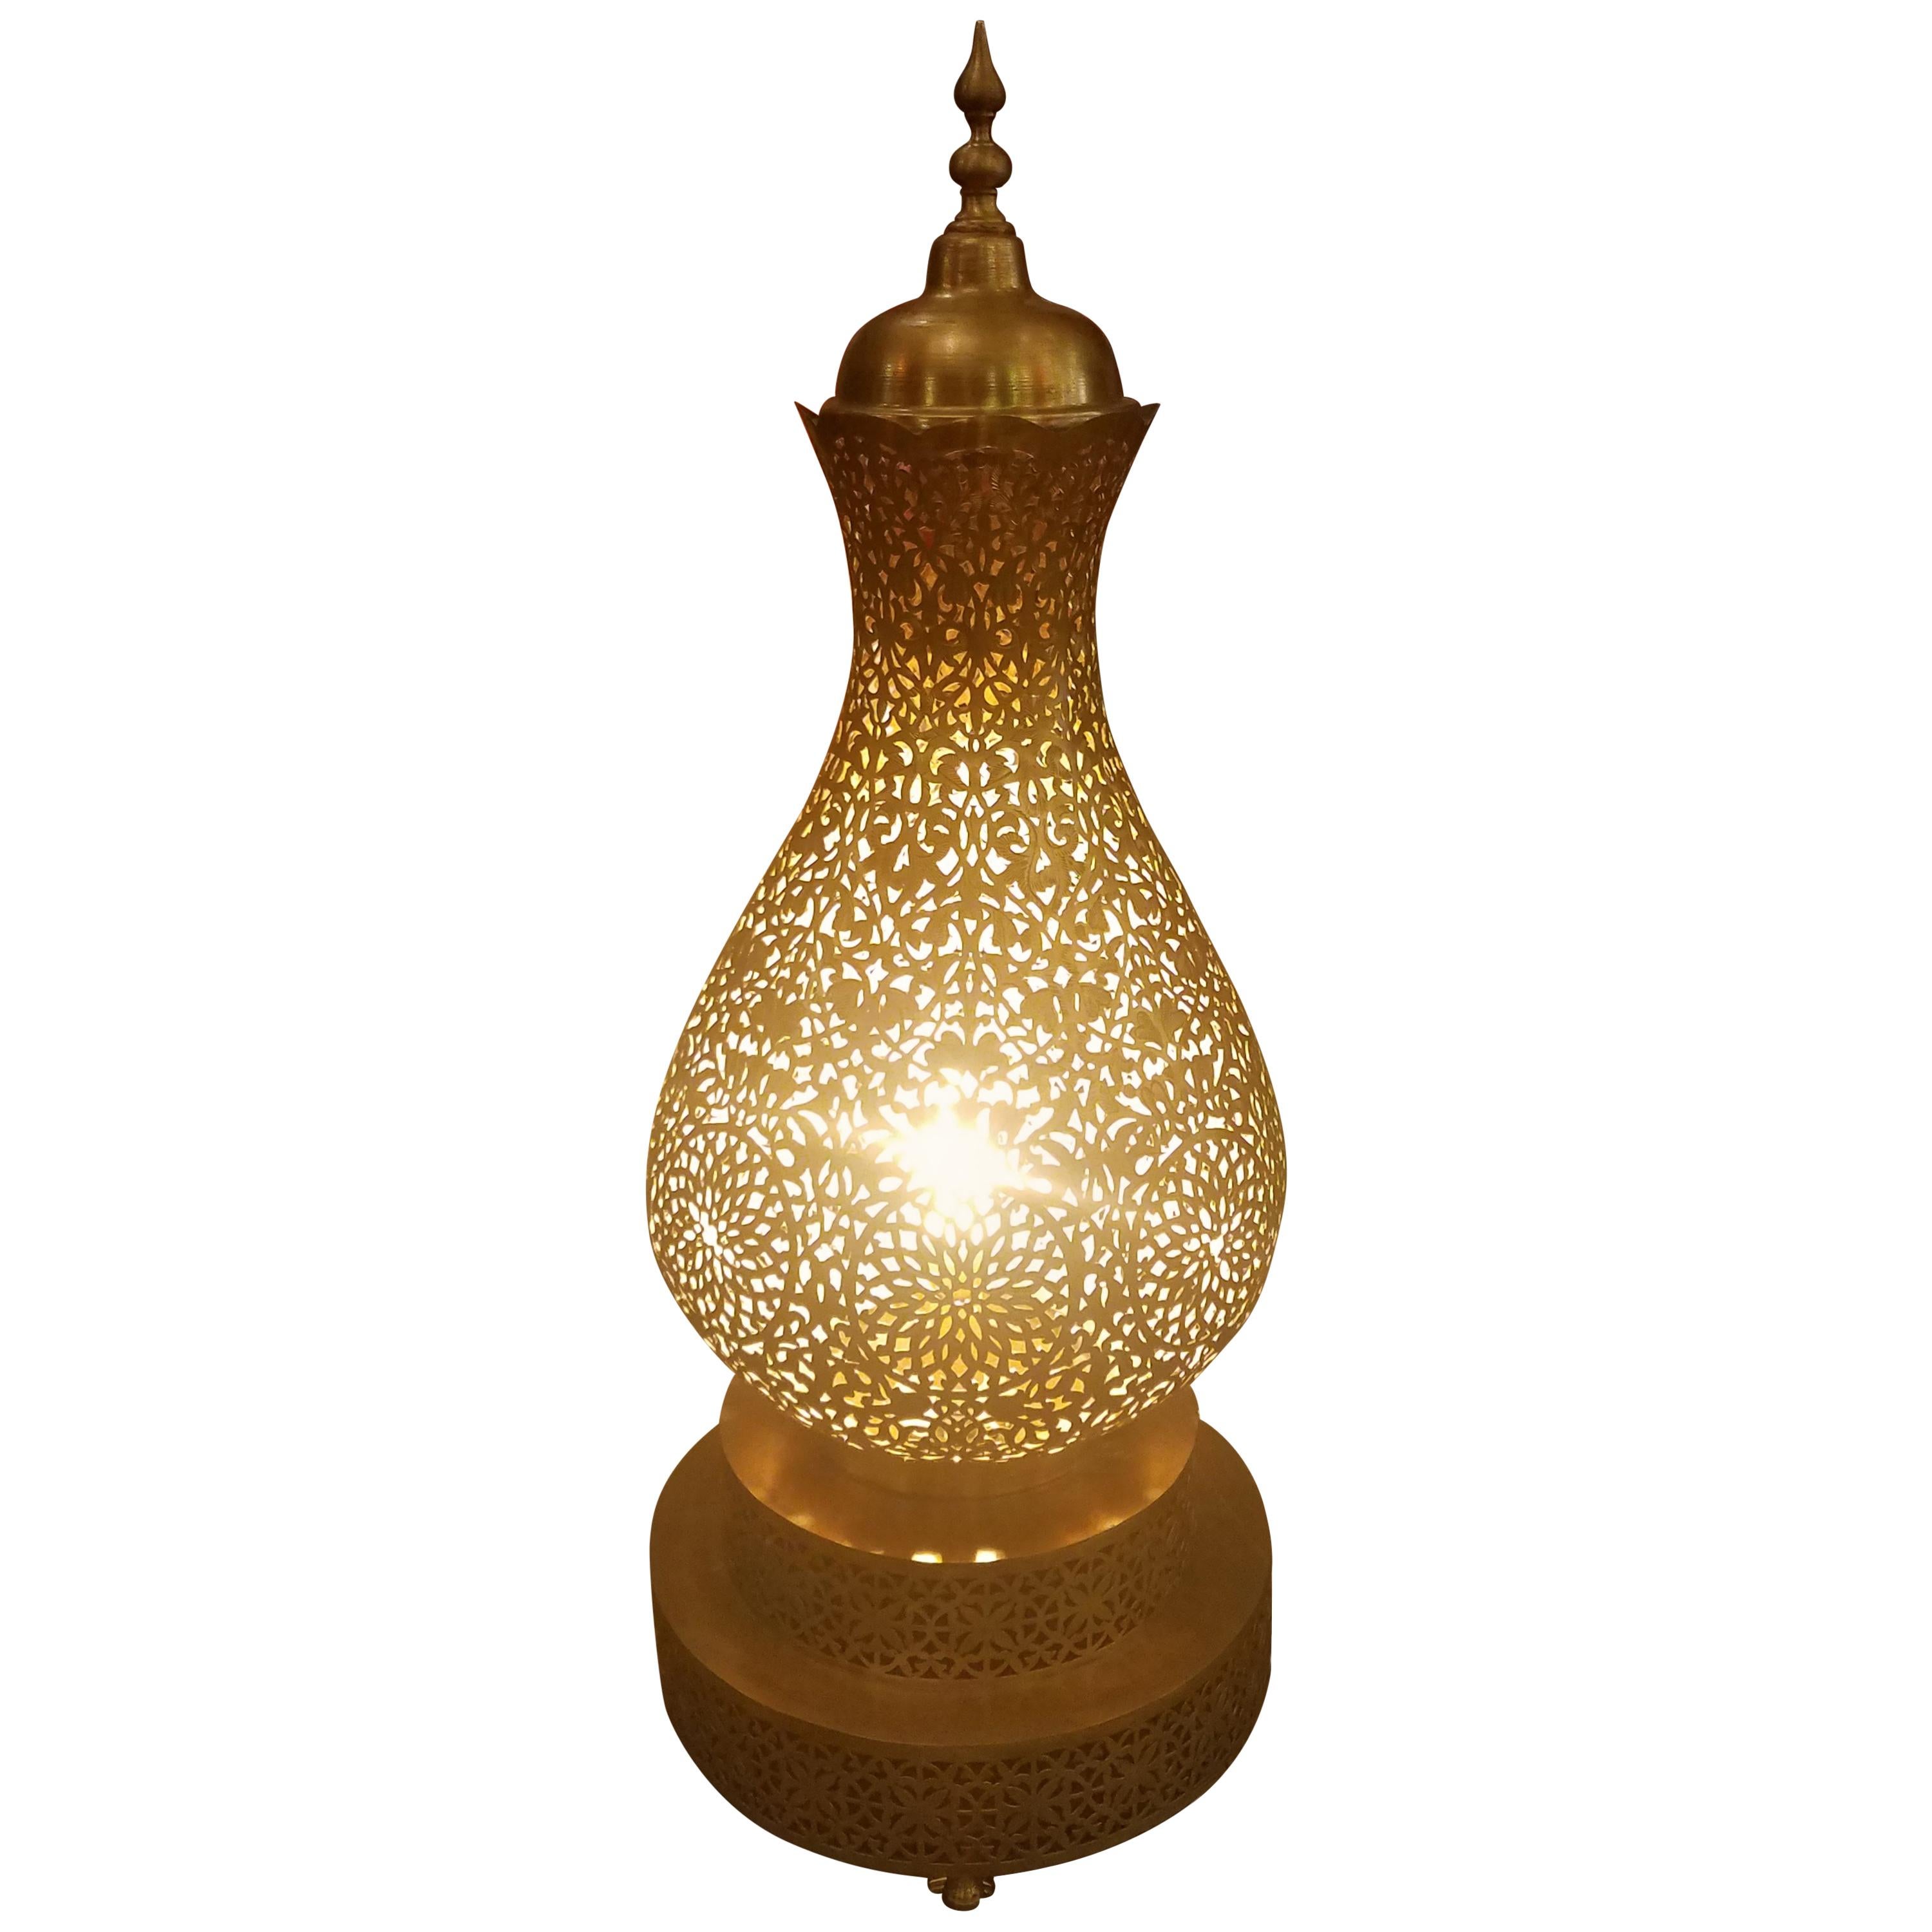 Koppa Intricate Moroccan Copper Lamp or Lantern, Table Lamp